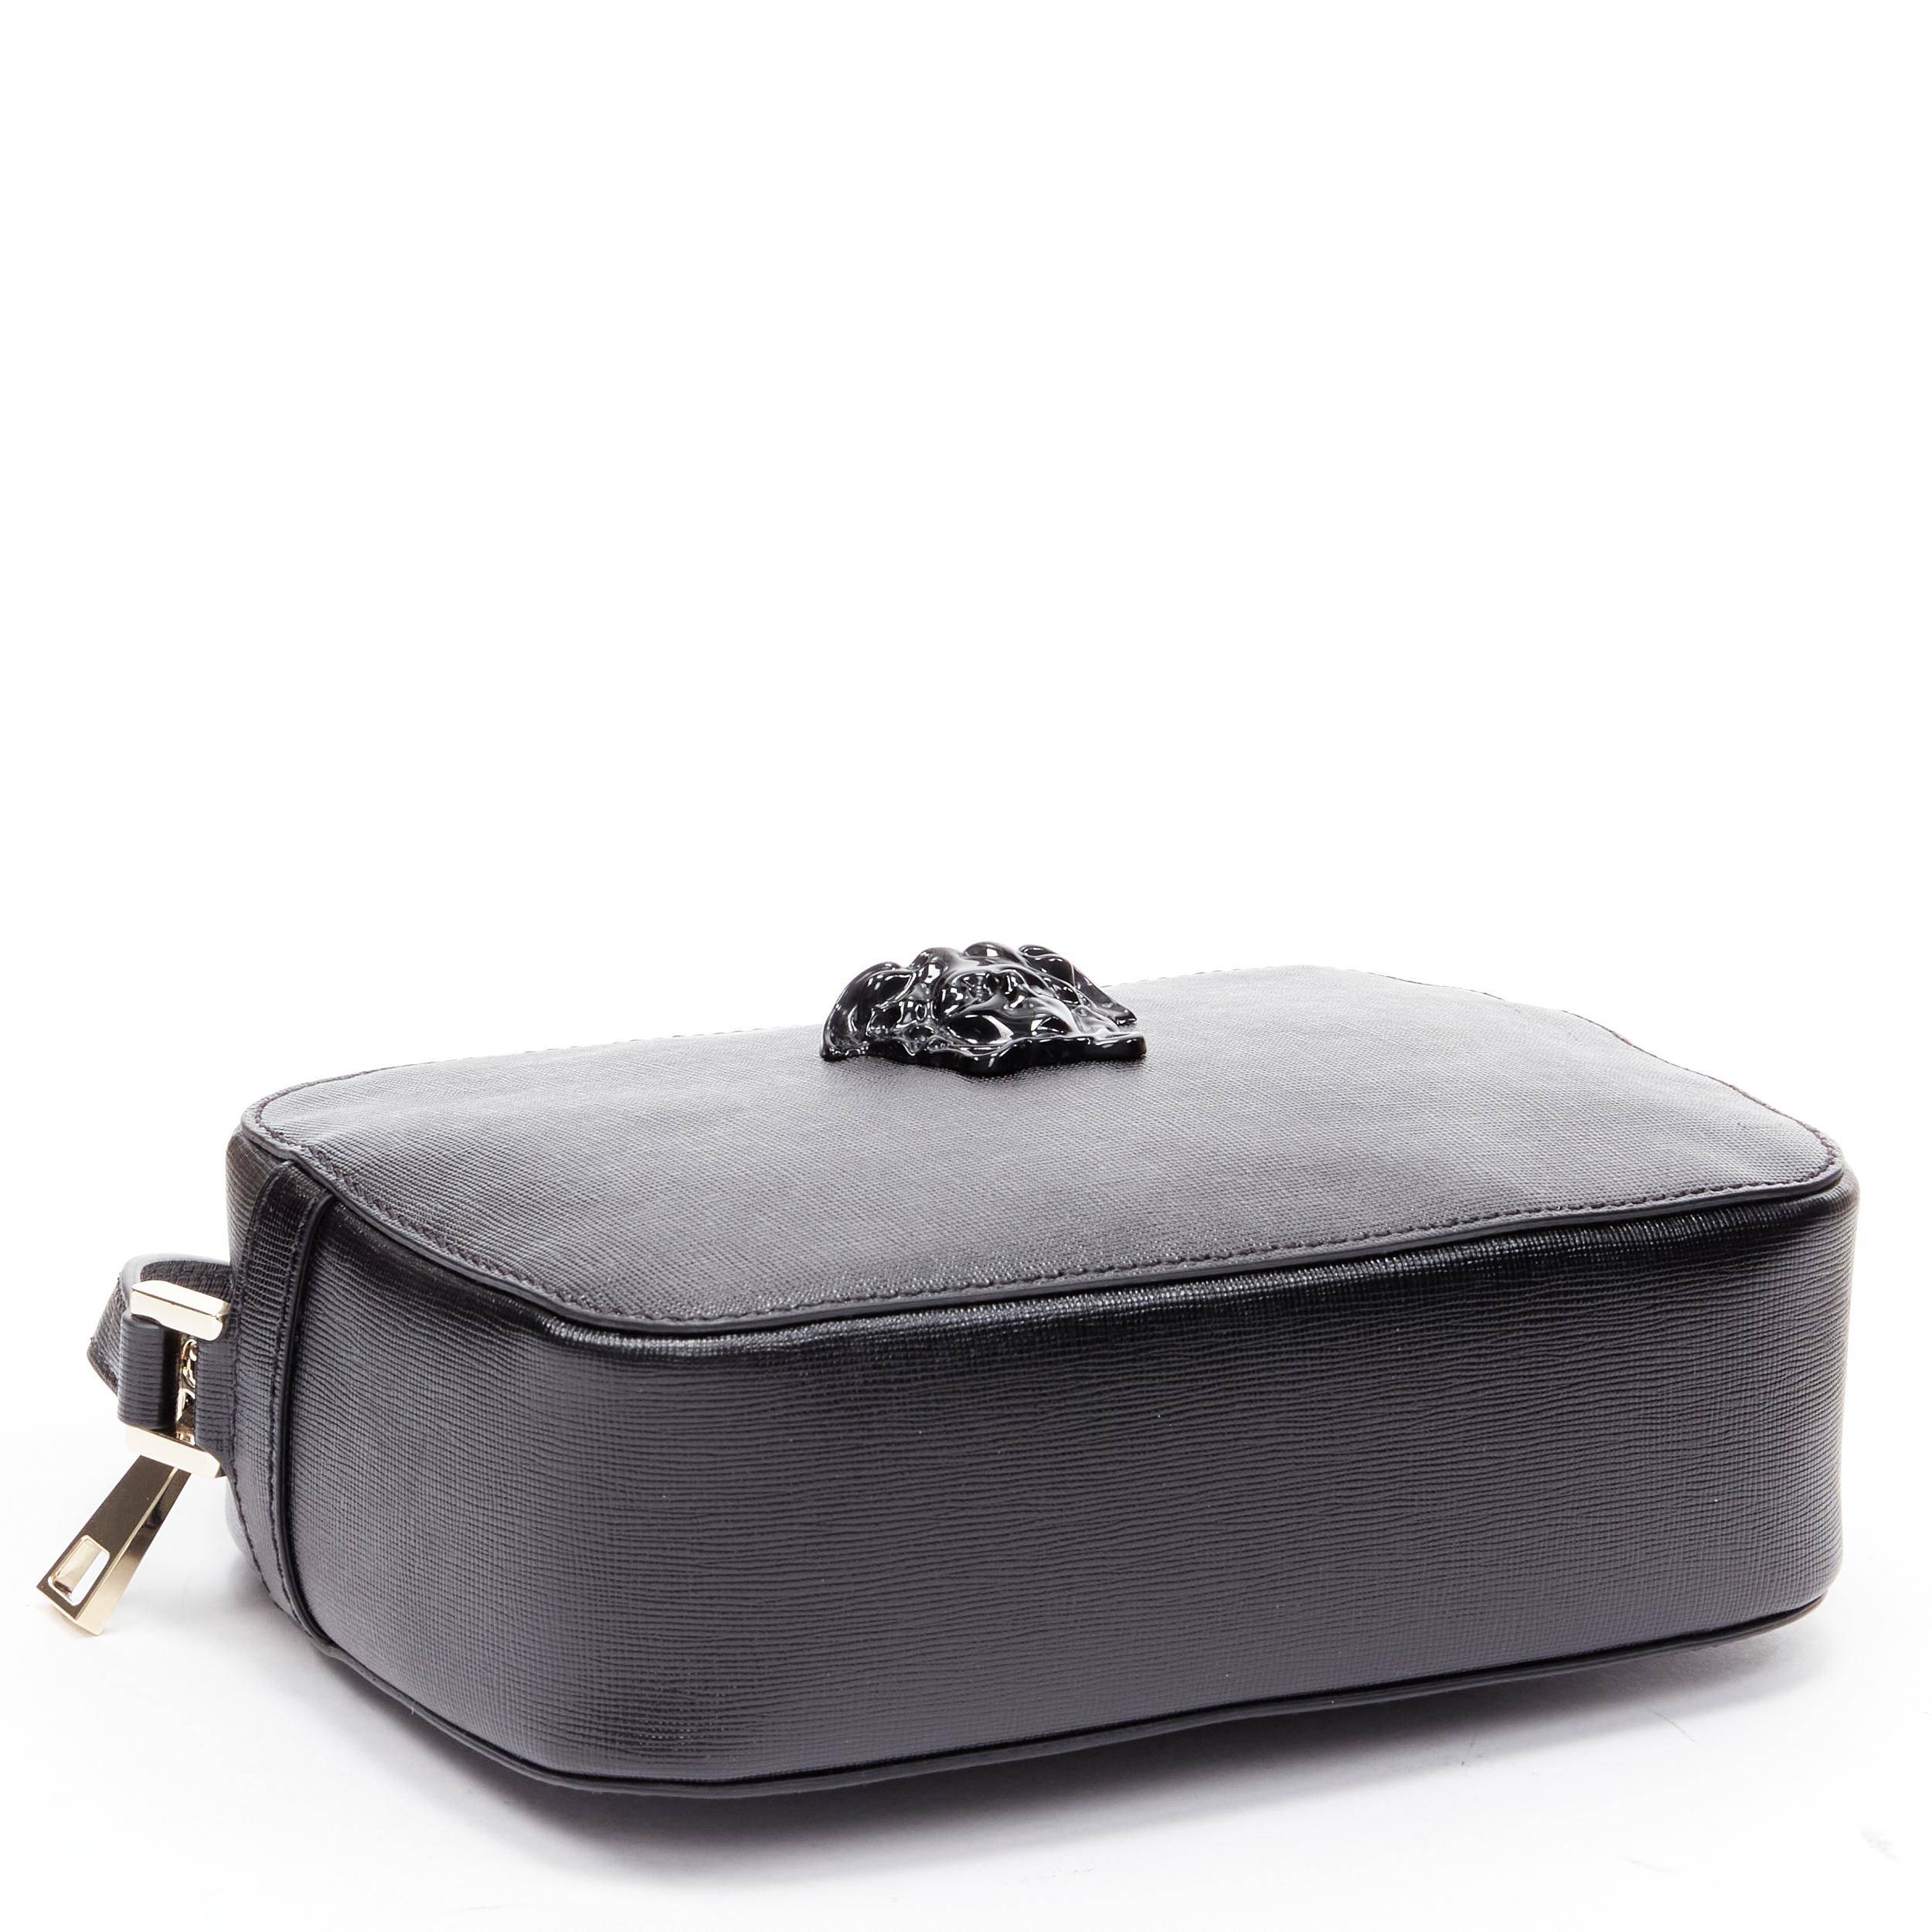 Black new VERSACE Palazzo Medusa black saffiano top zip medium crossbody camera bag